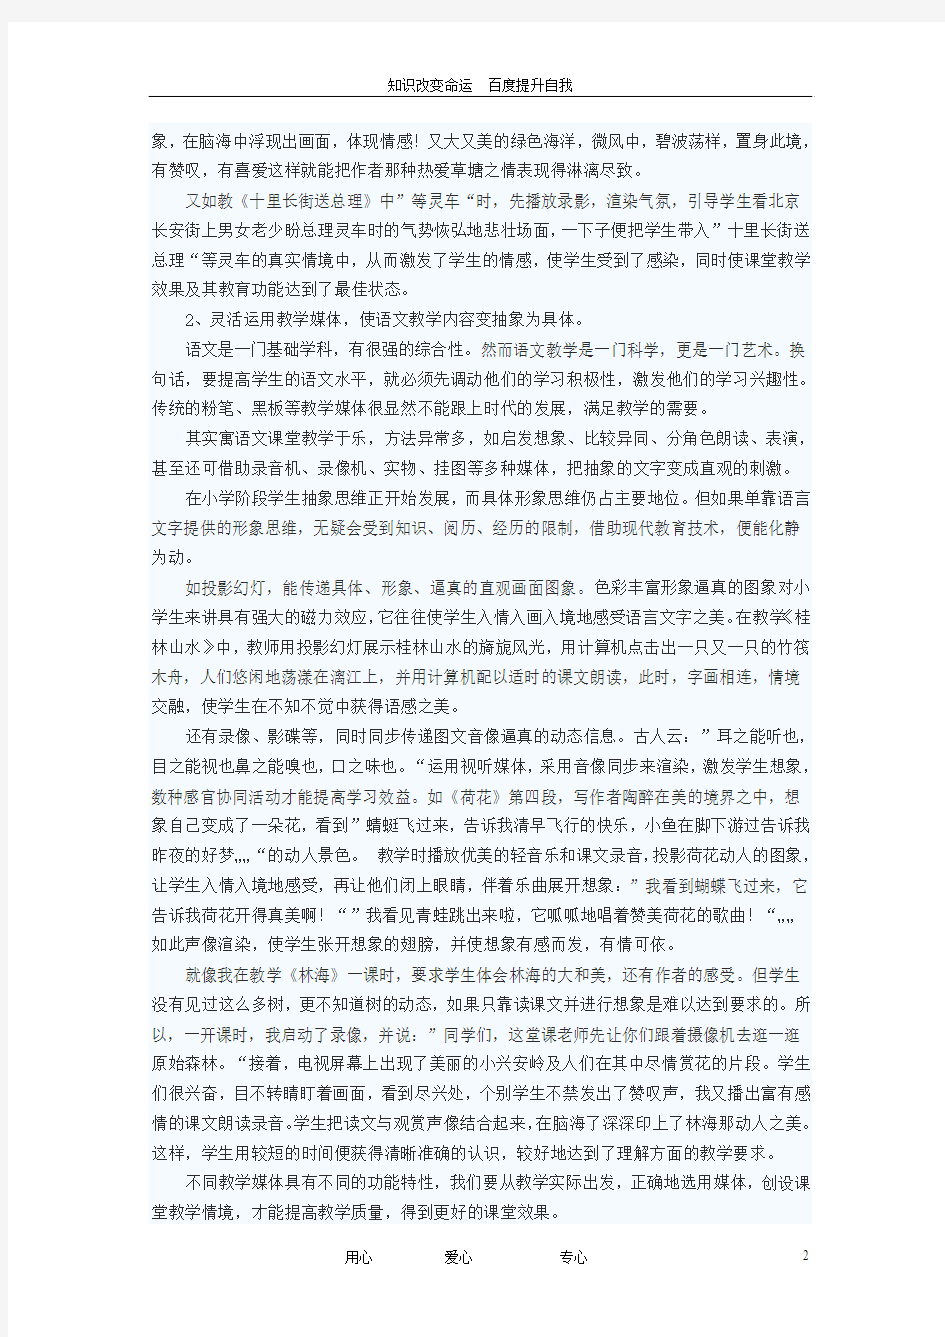 (no.1)初中语文教学论文 语文课堂教学中多种教学手段的应用